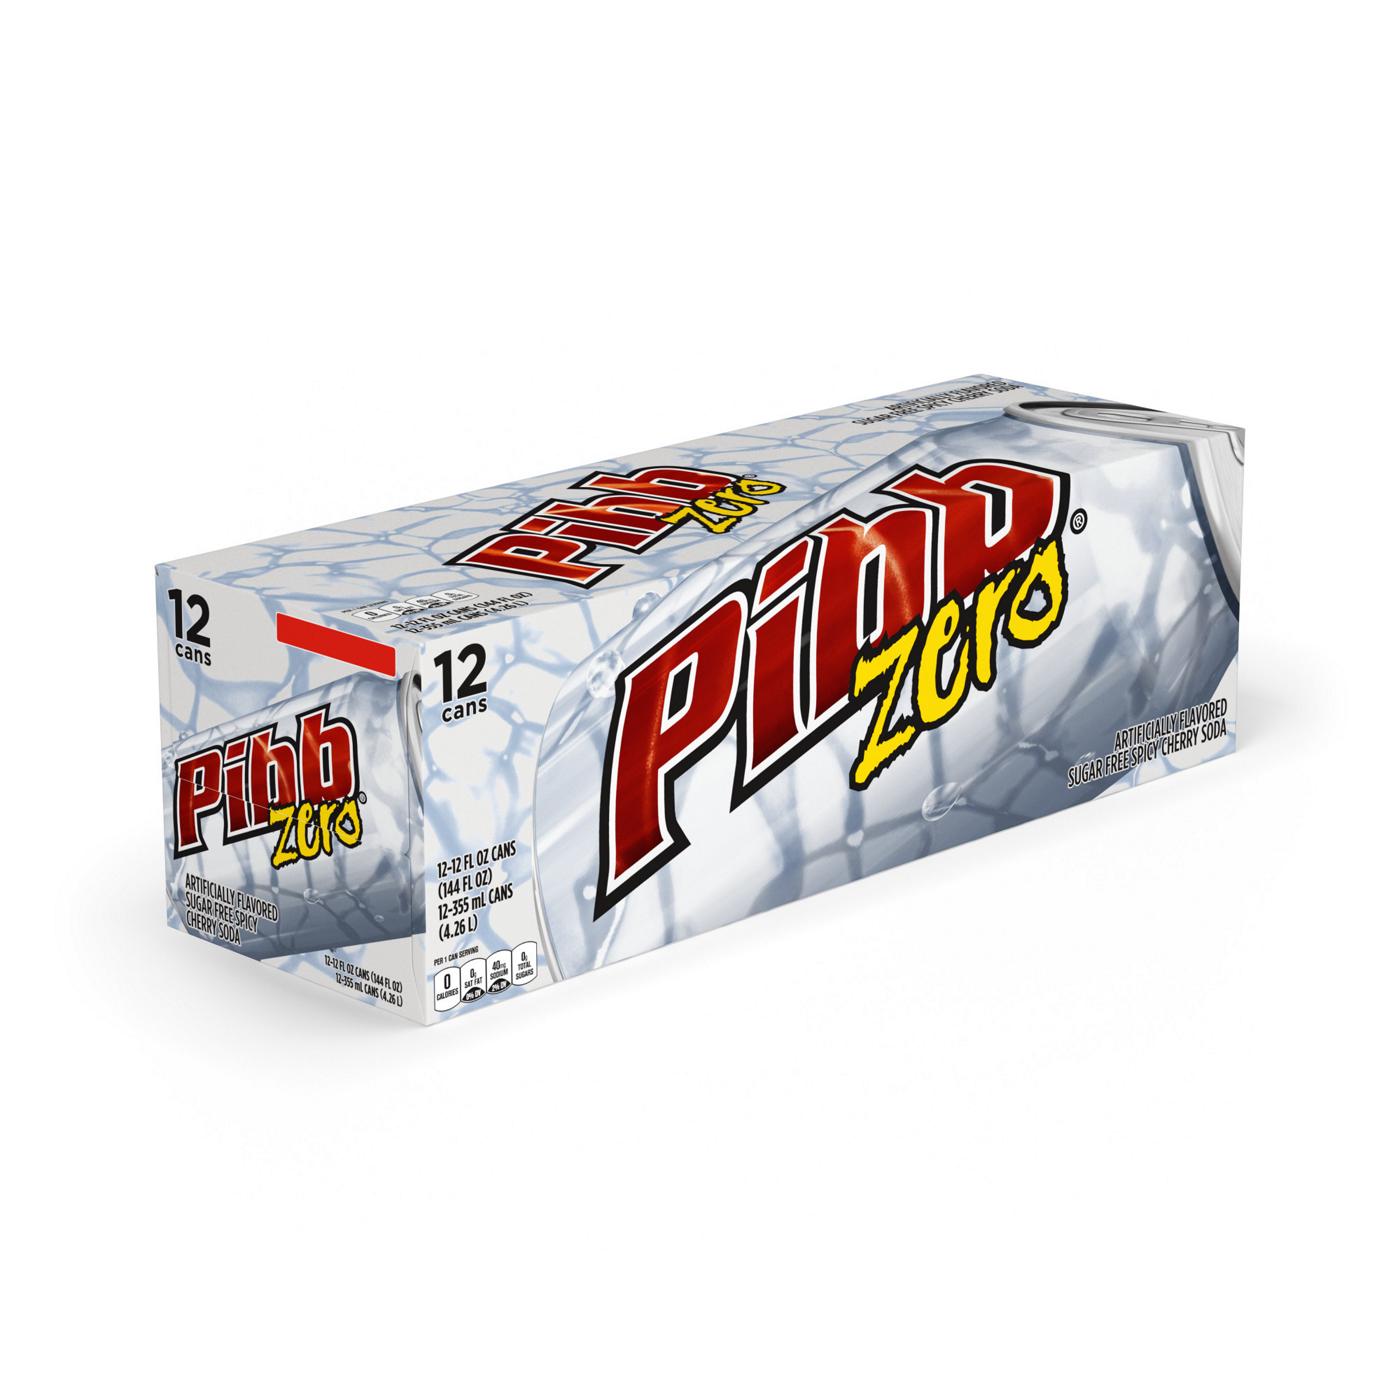 Pibb Zero Sugar Free Soda 12 oz Cans; image 2 of 3